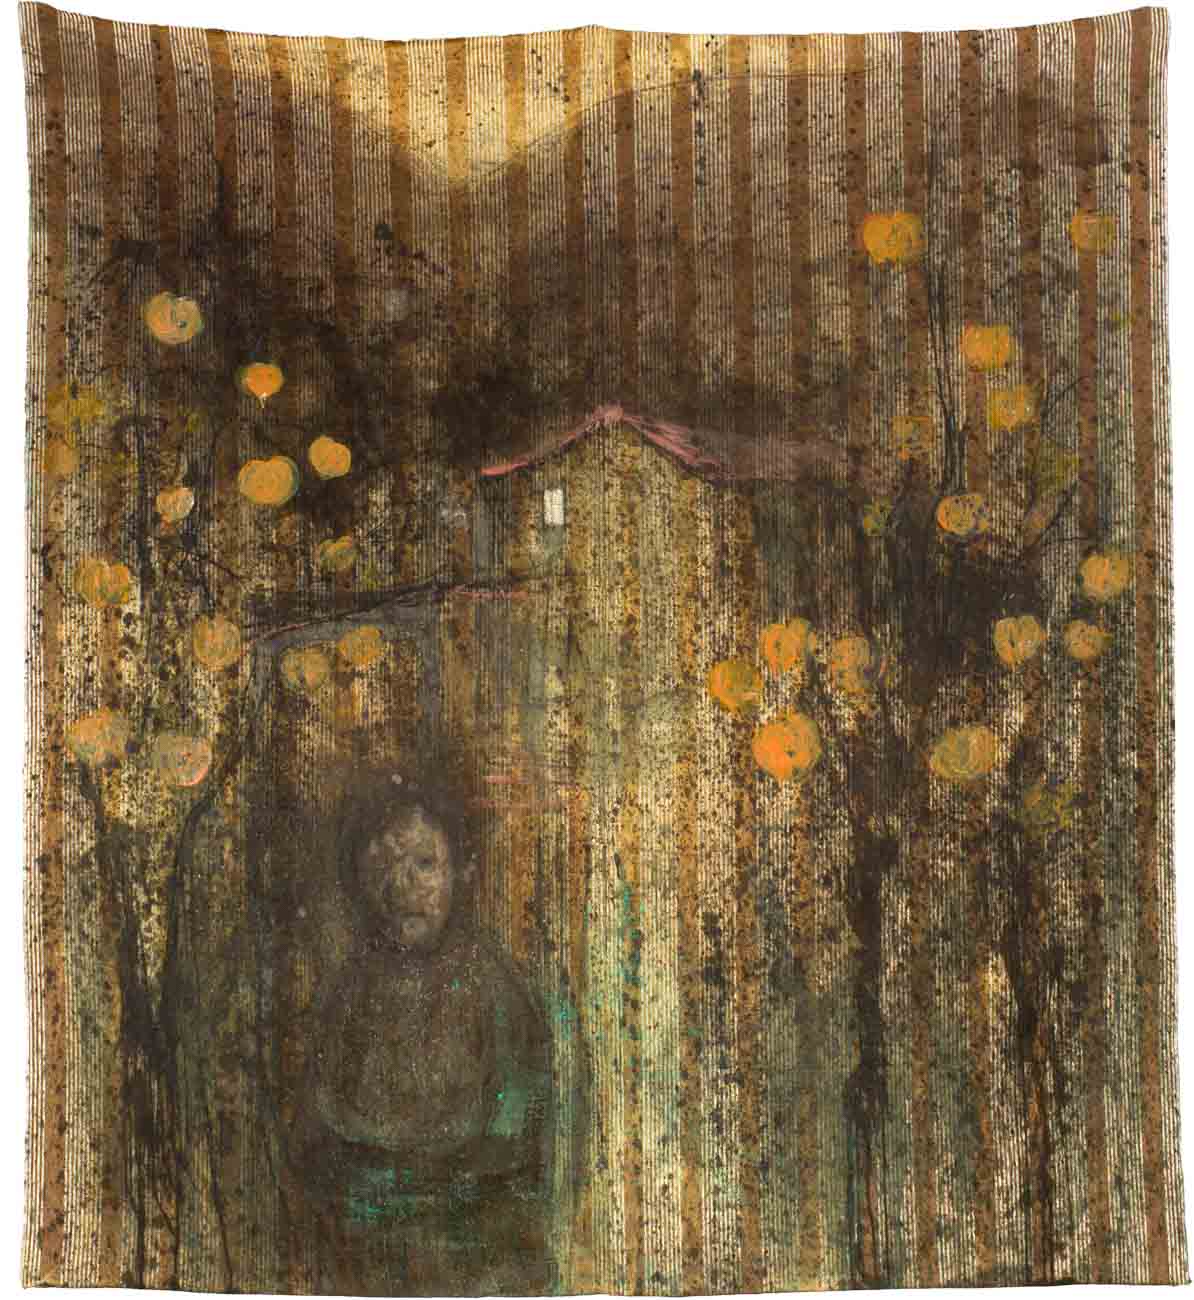 Chiara Lera - Camí de les Aigües, 212 x 190 cm, tecnica mista su tela di materasso, 2011